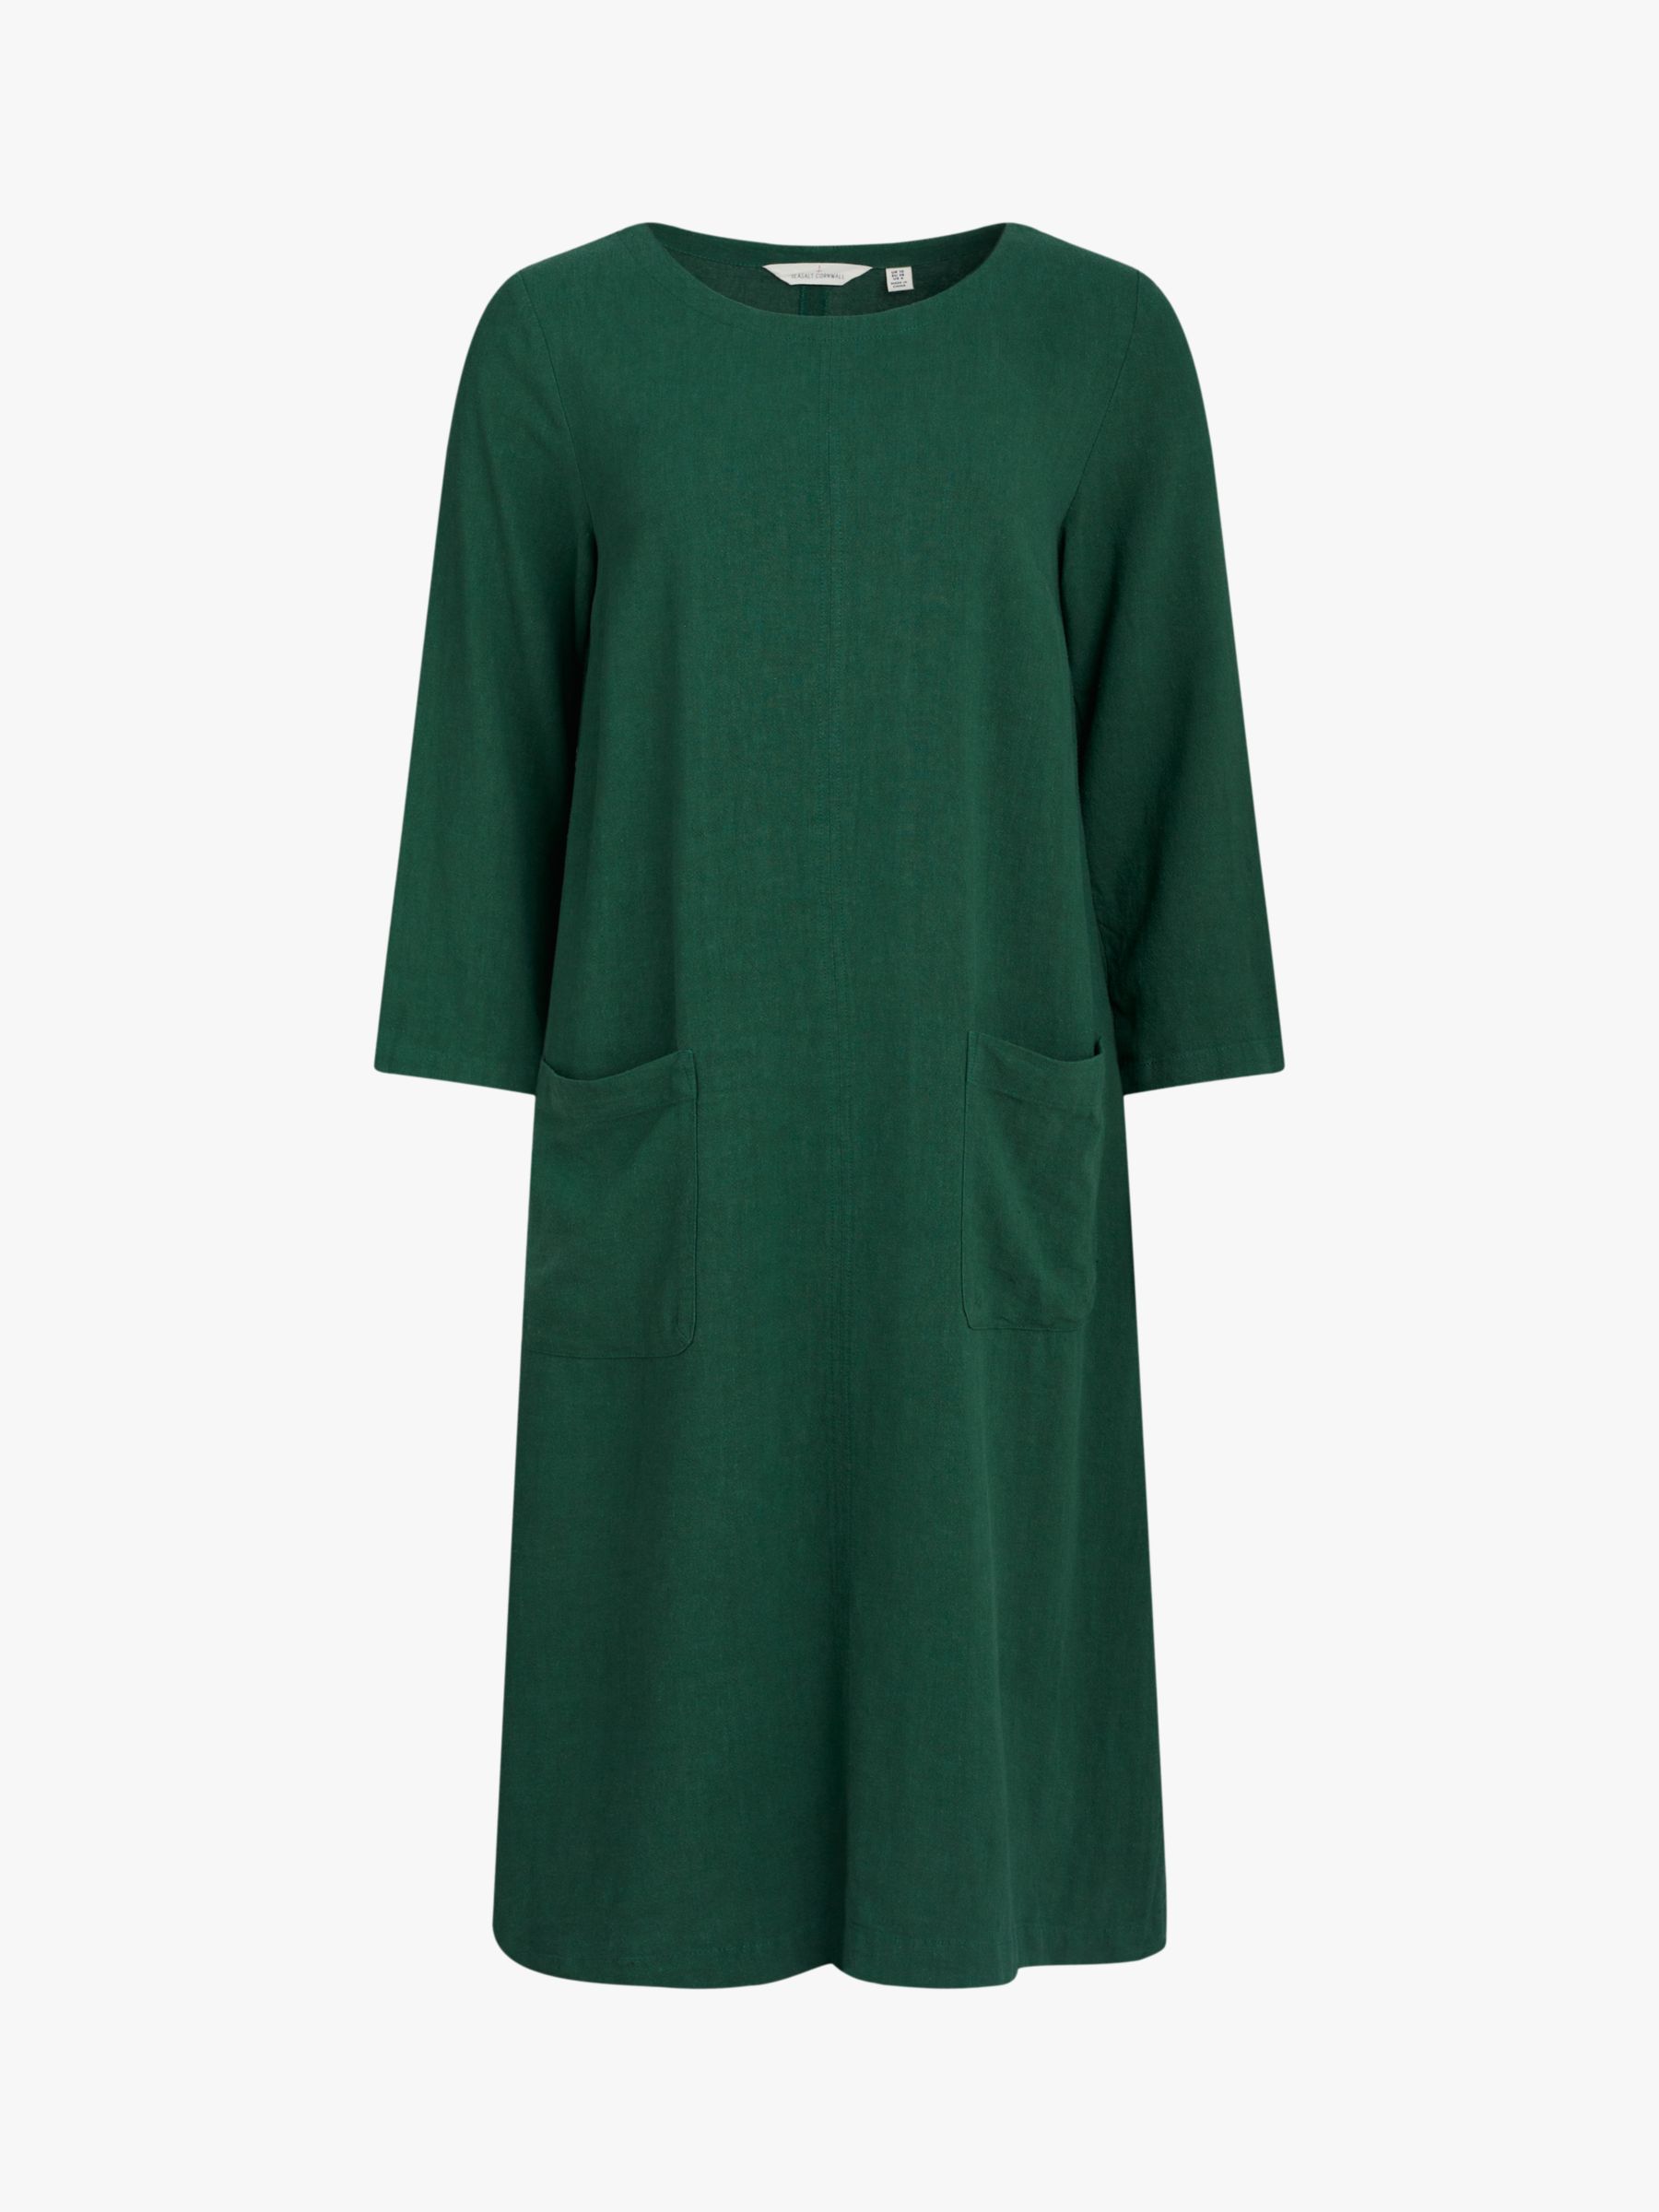 Seasalt Peak Harvest Linen Blend Dress, Dark Green